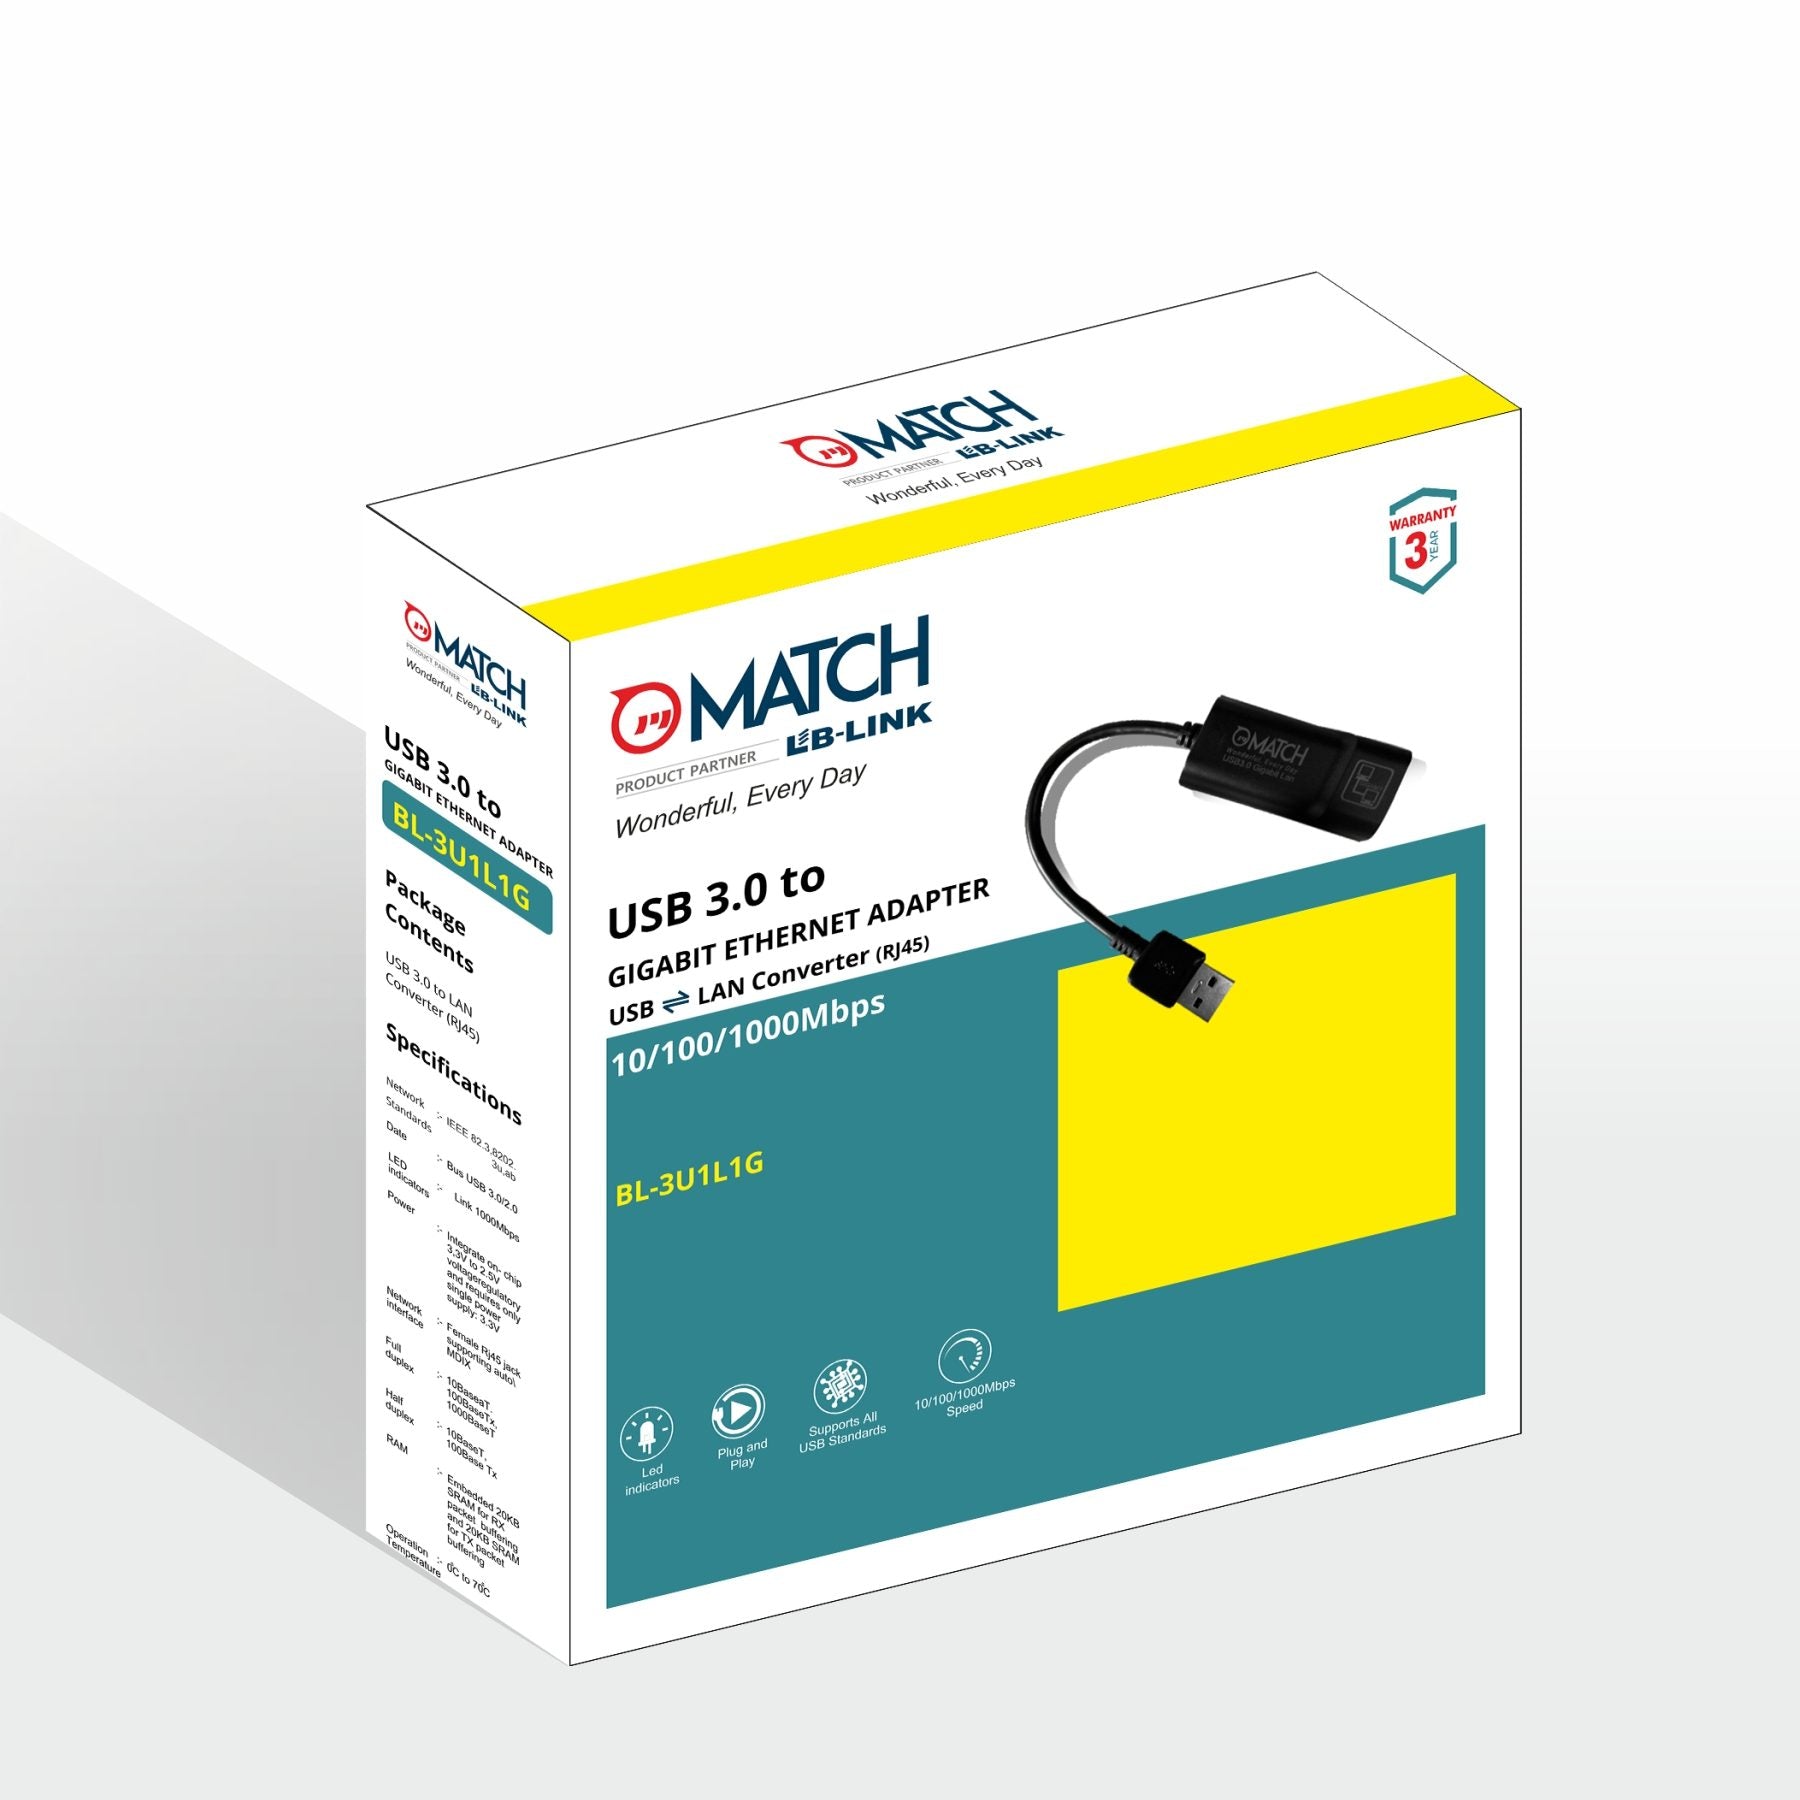 match lb link gigabit ethernet adapter box